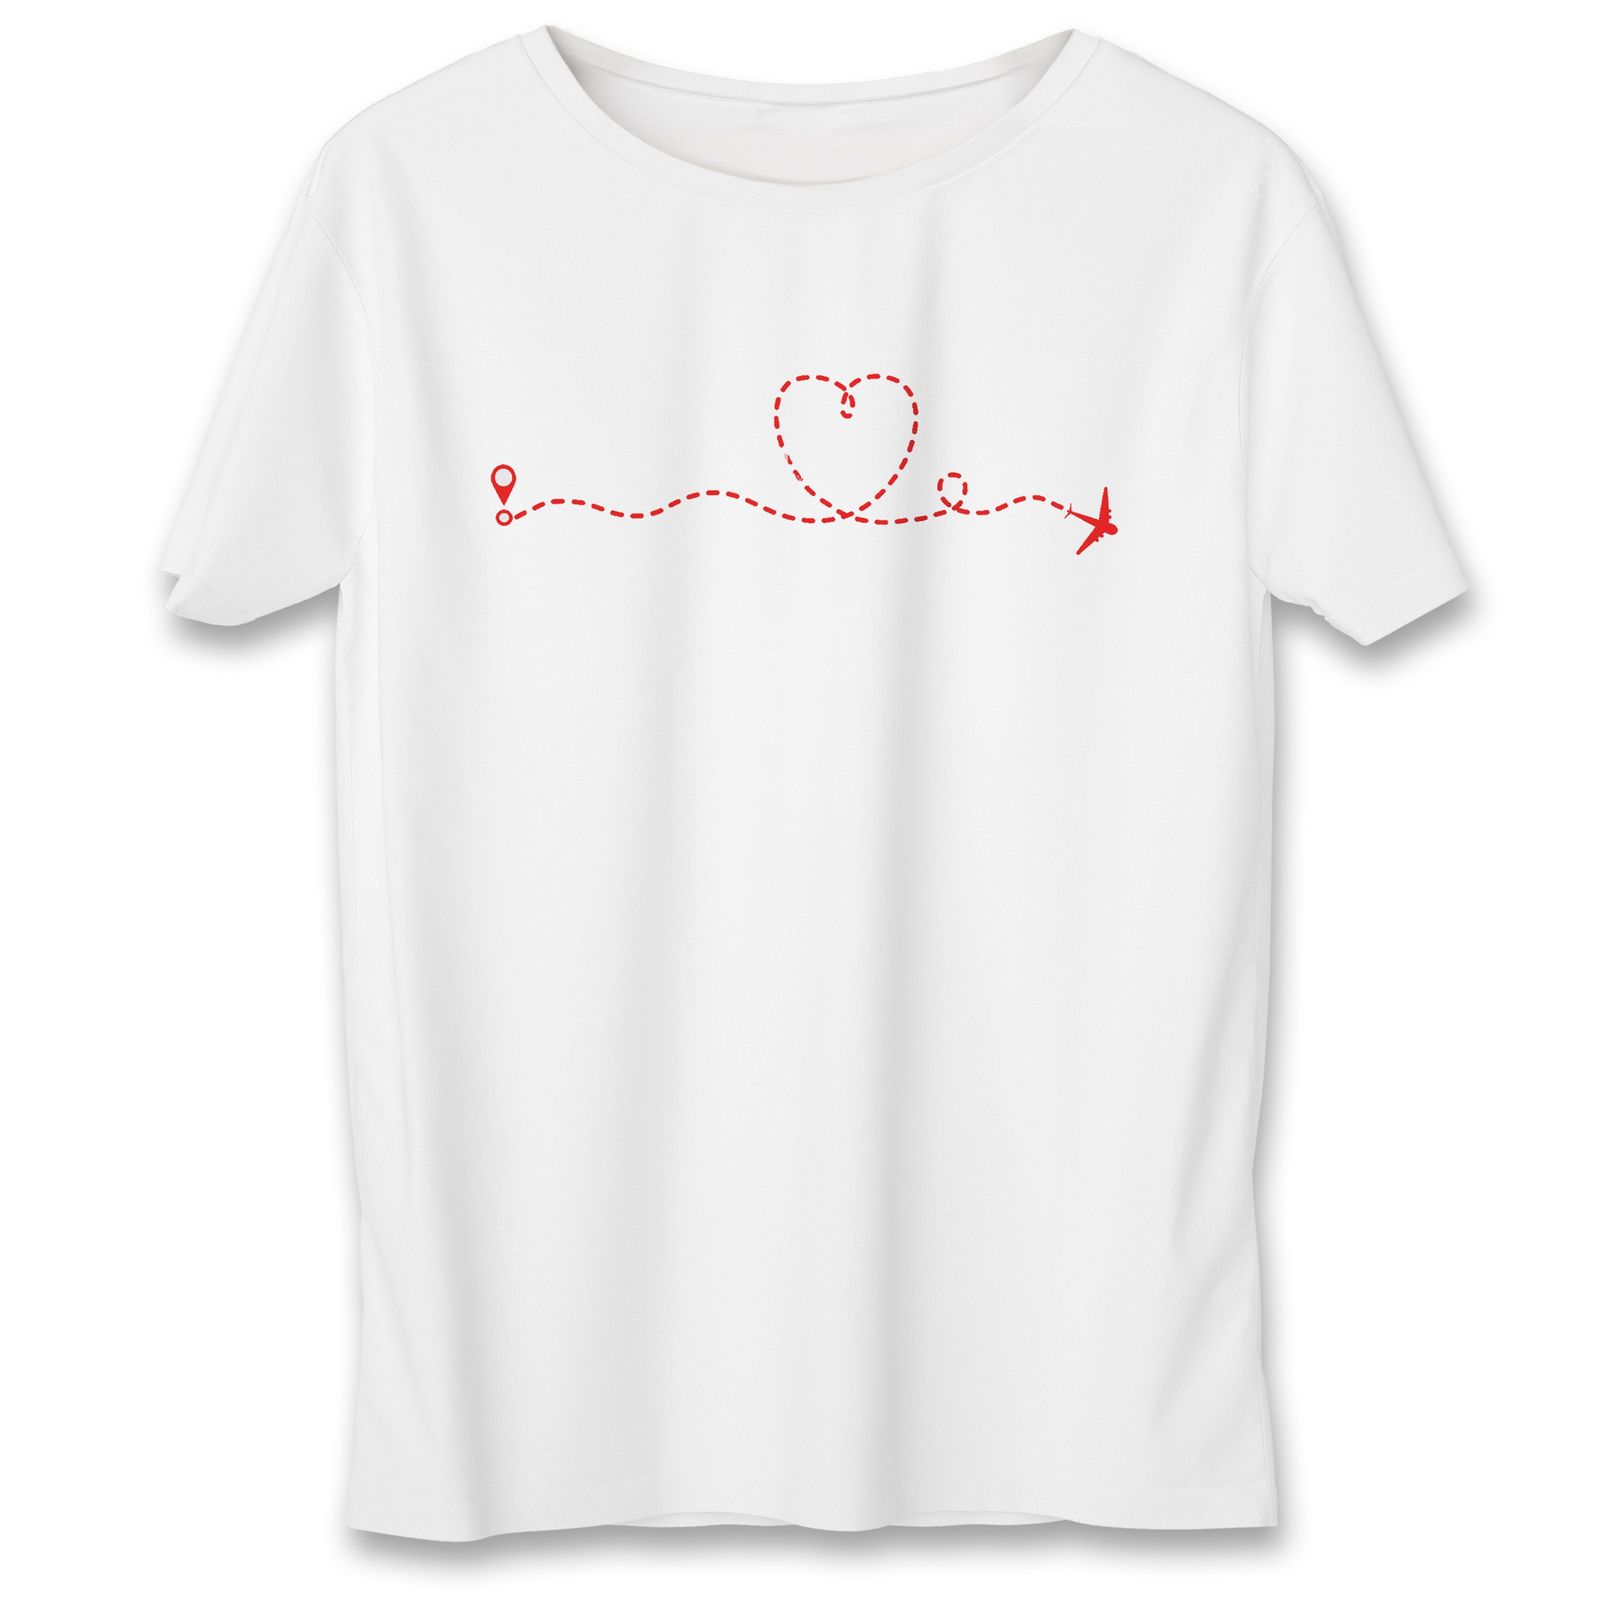 تی شرت زنانه به رسم طرح مسیر قلب کد 574 -  - 1